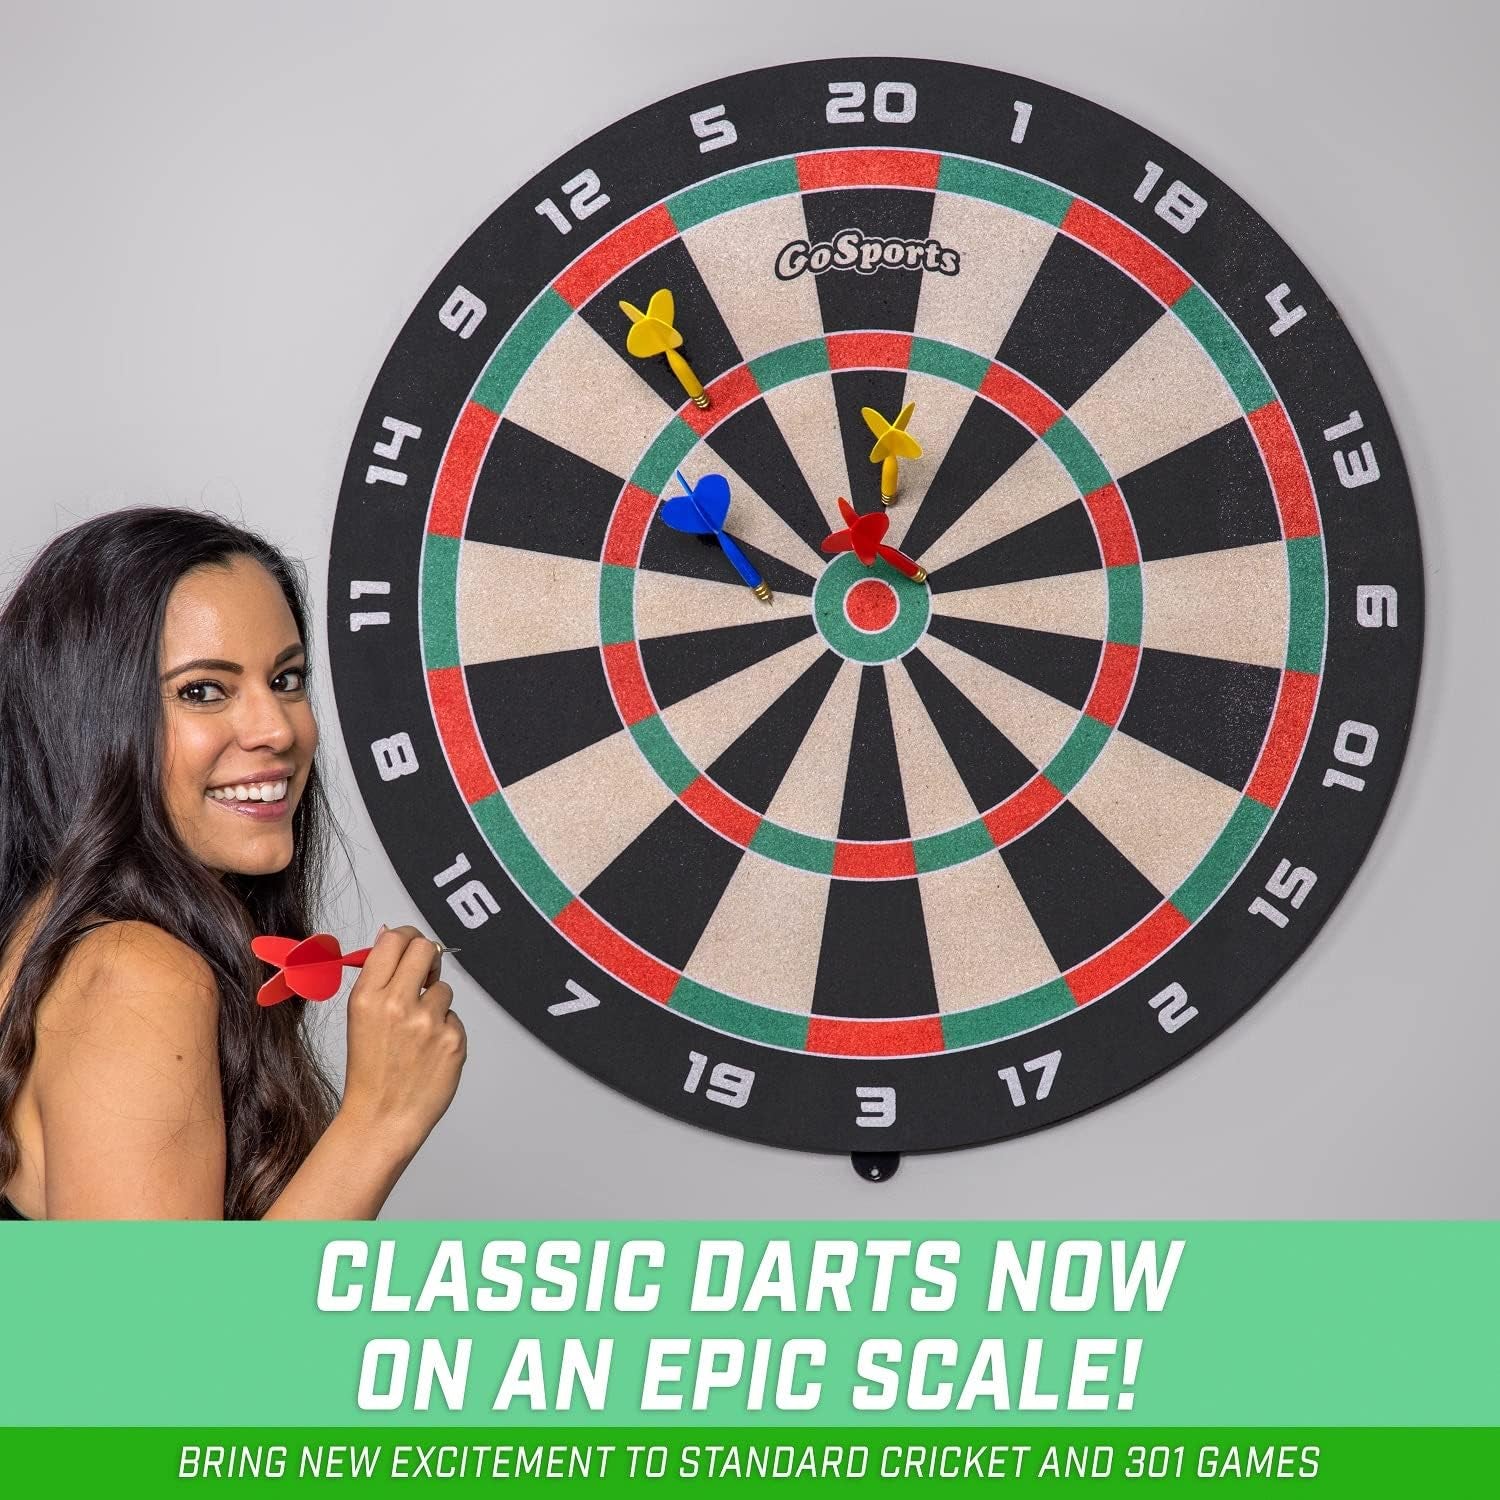 Giant 3 Ft  Cork Dartboards - Includes 12 Giant Darts and Scoreboard - New Fun Twist on Darts